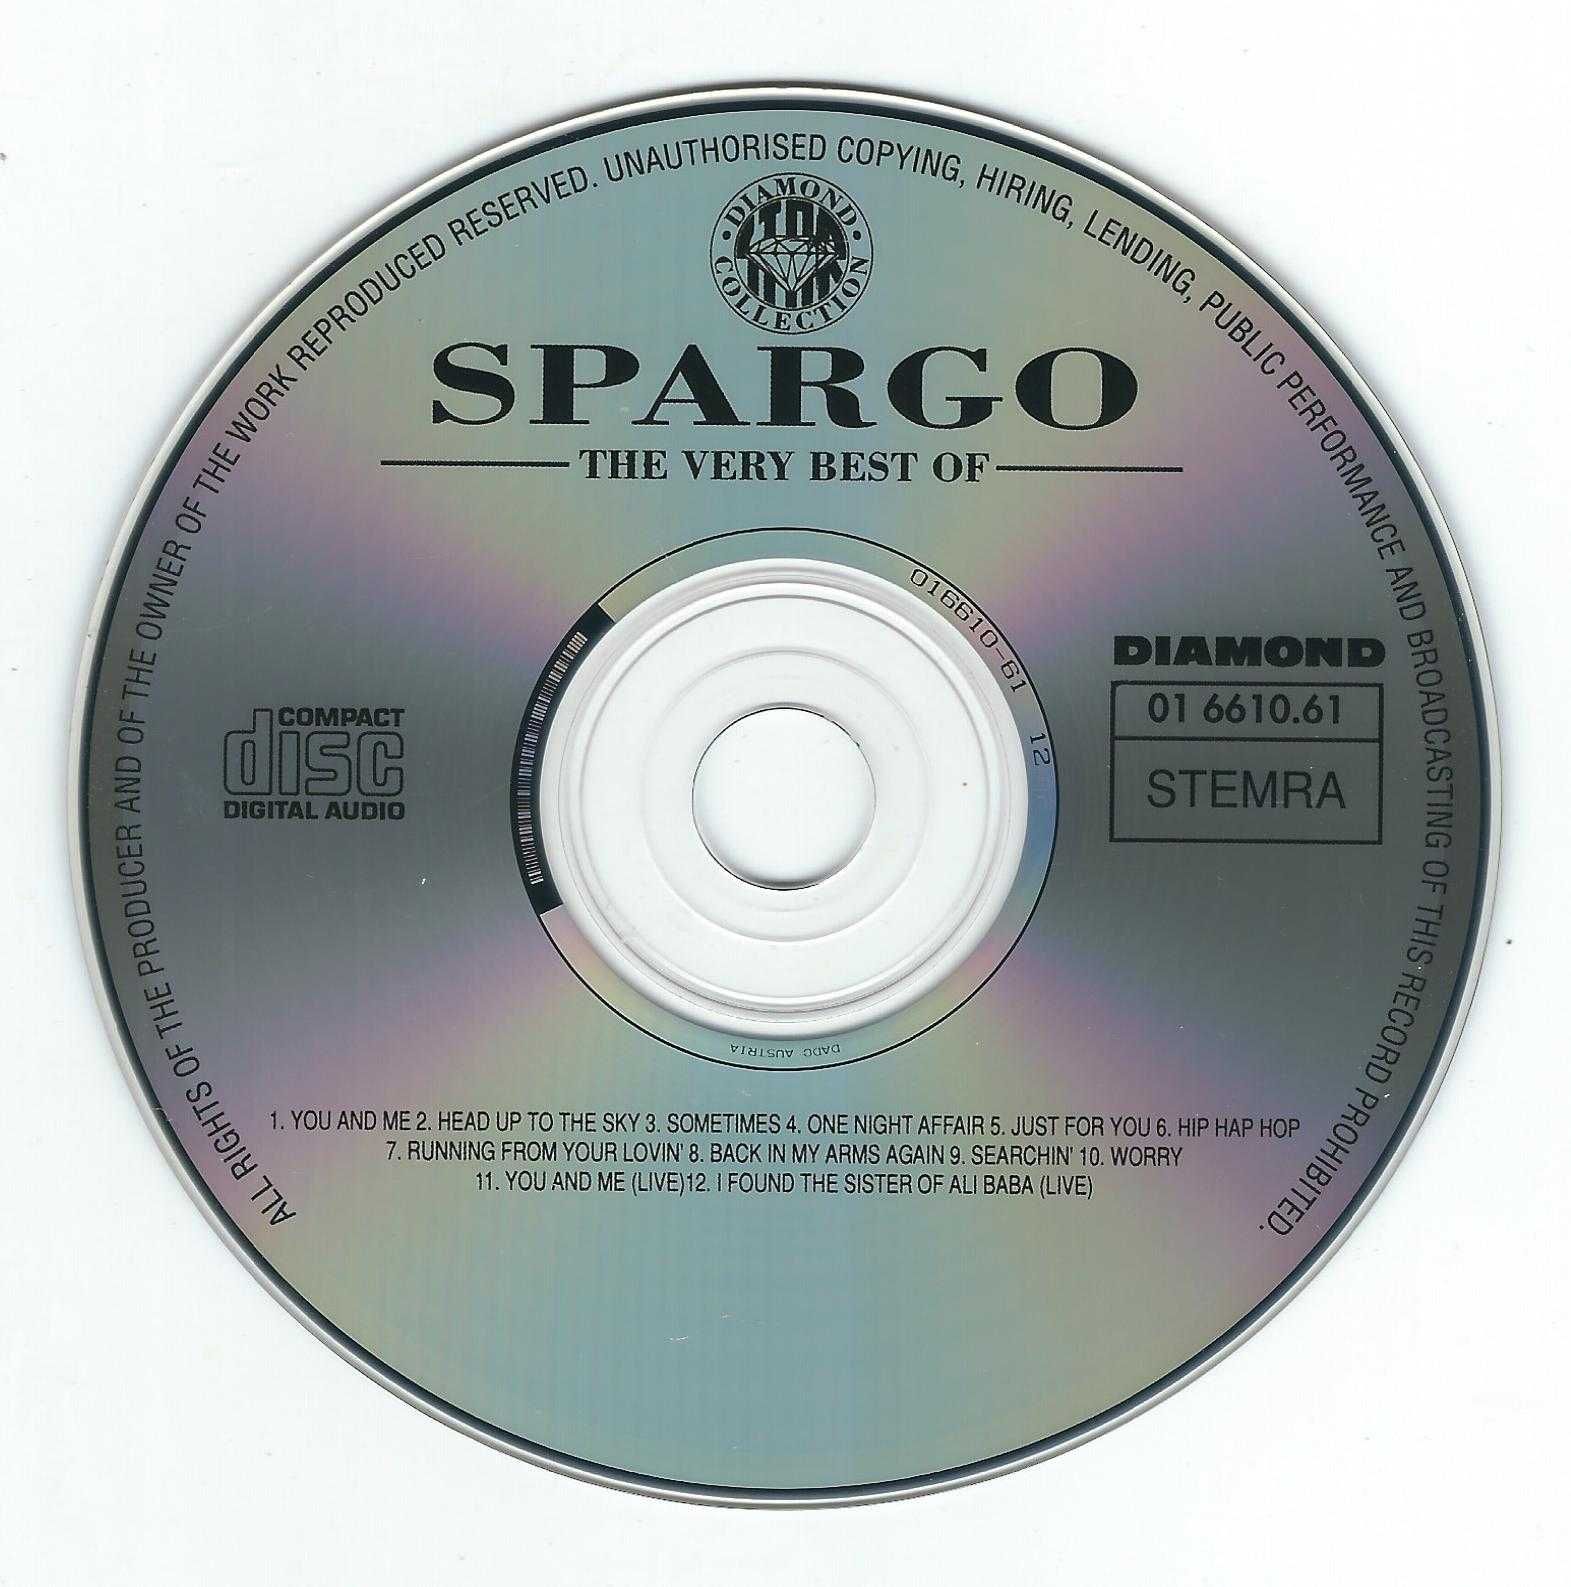 CD Spargo - The Very Best Of Spargo (1991) (Diamond)